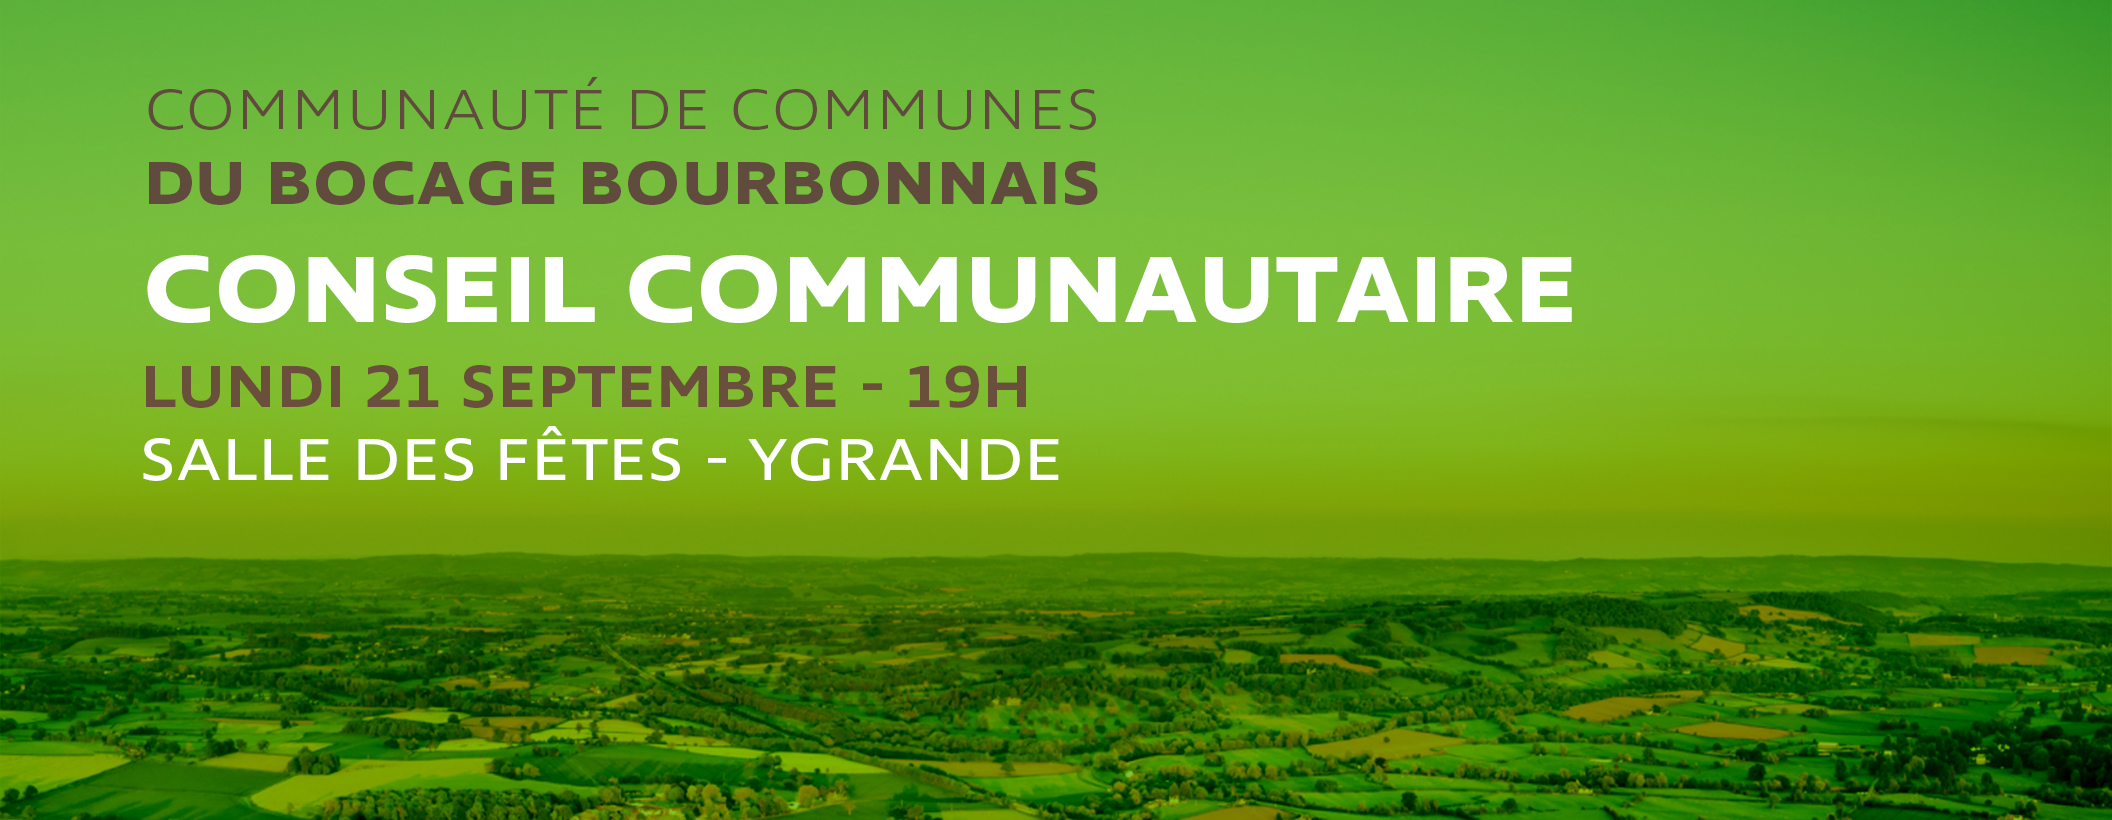 Prochain Conseil Communautaire : lundi 21 septembre à Ygrande